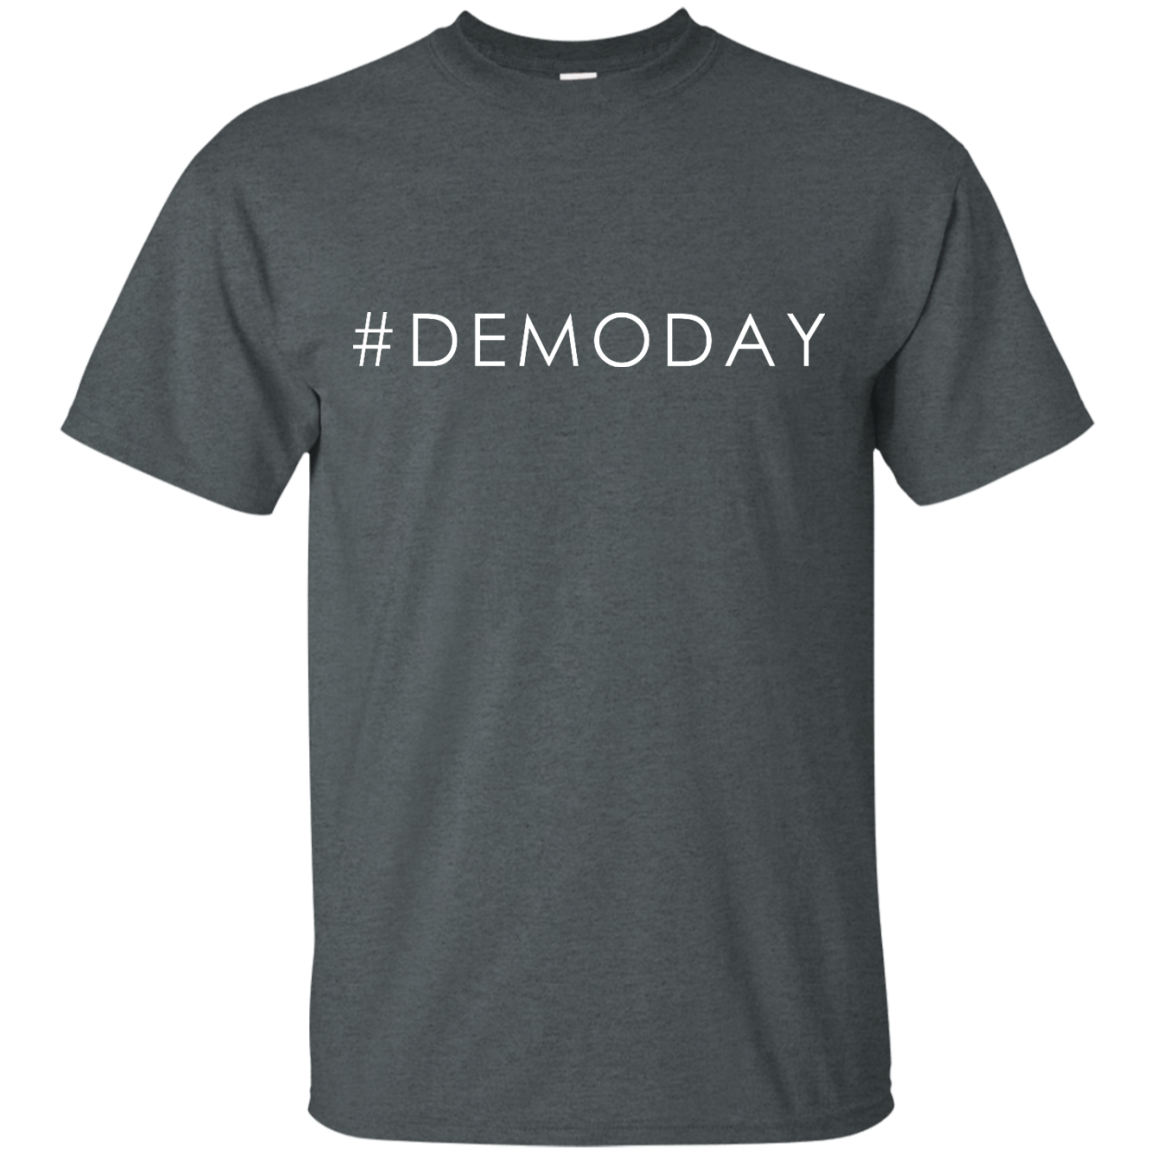 Demoday Shirt Sweatshirt Demo Day Ifrogtees